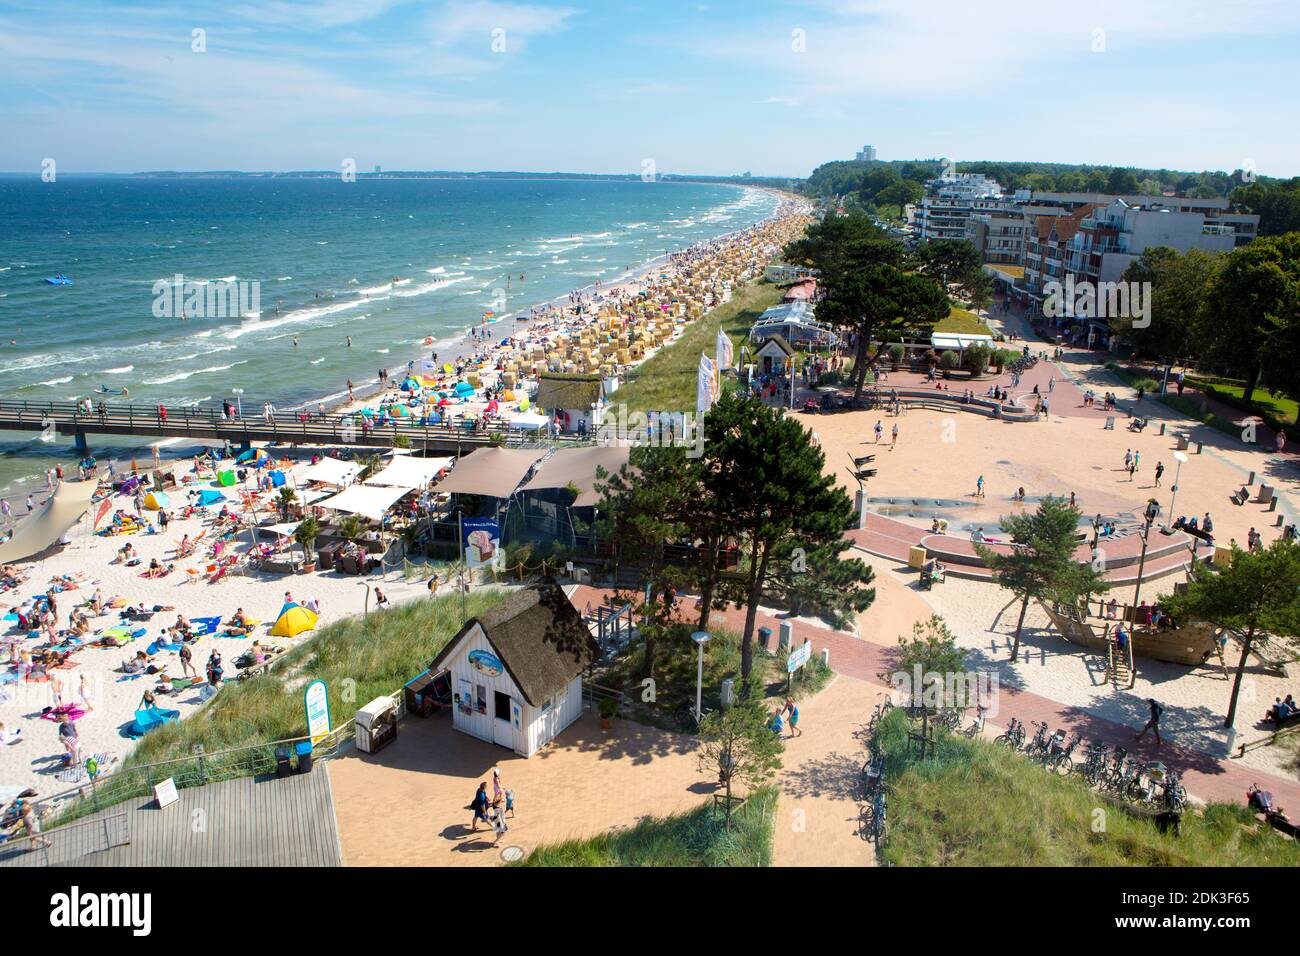 Germany, Schleswig-Holstein, Scharbeutz, Top view of the beach and boardwalk, Stock Photo